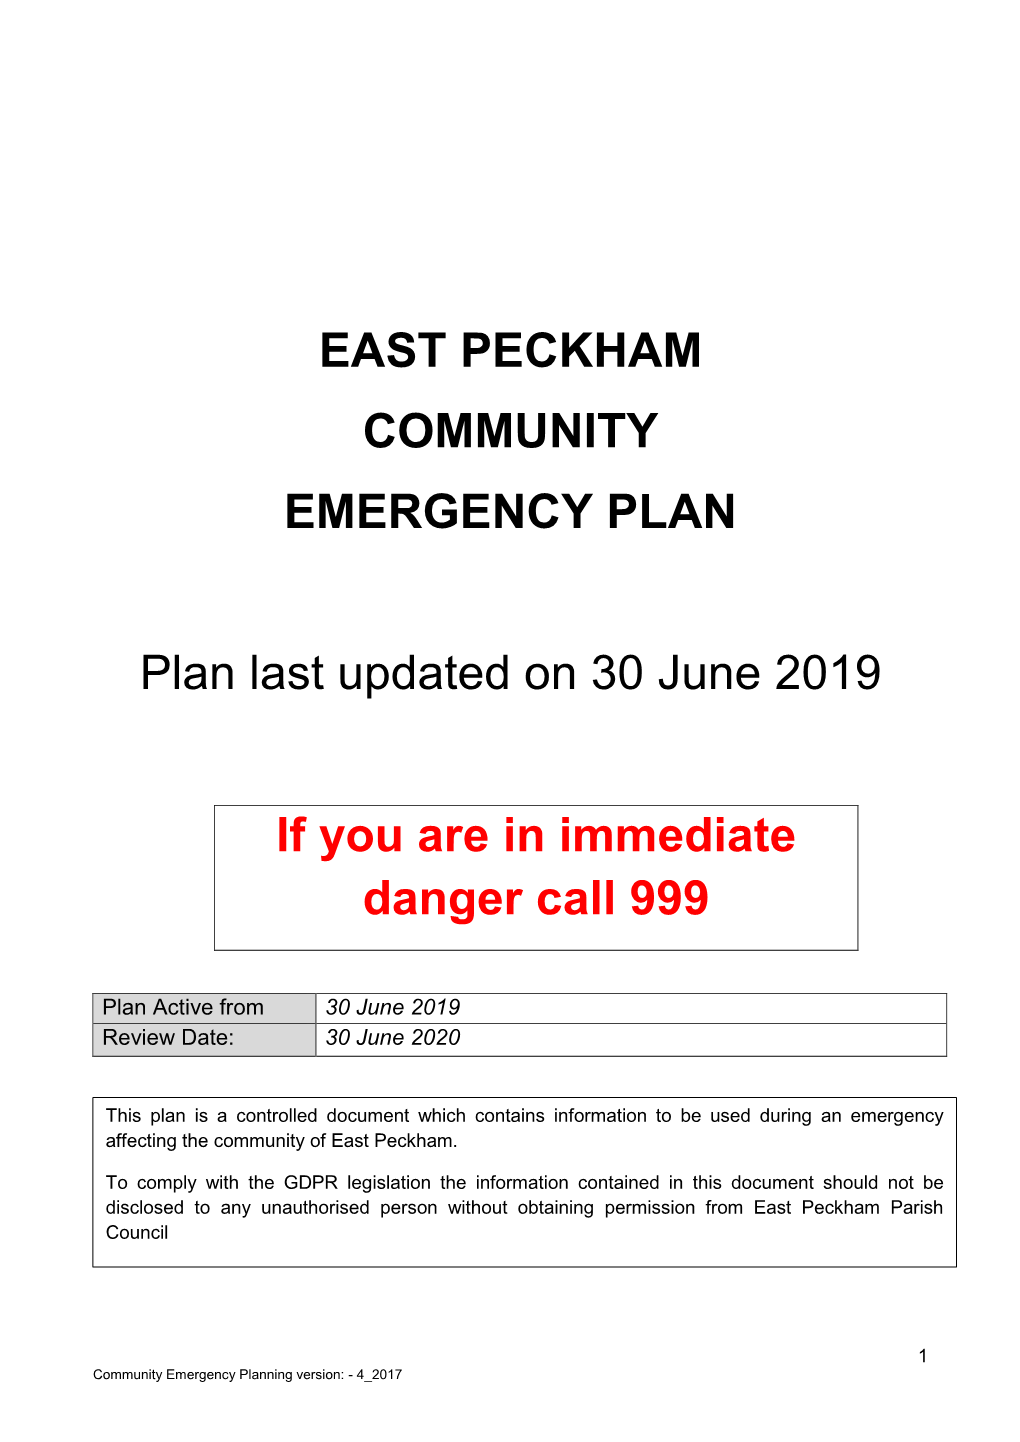 EAST PECKHAM COMMUNITY EMERGENCY PLAN Plan Last